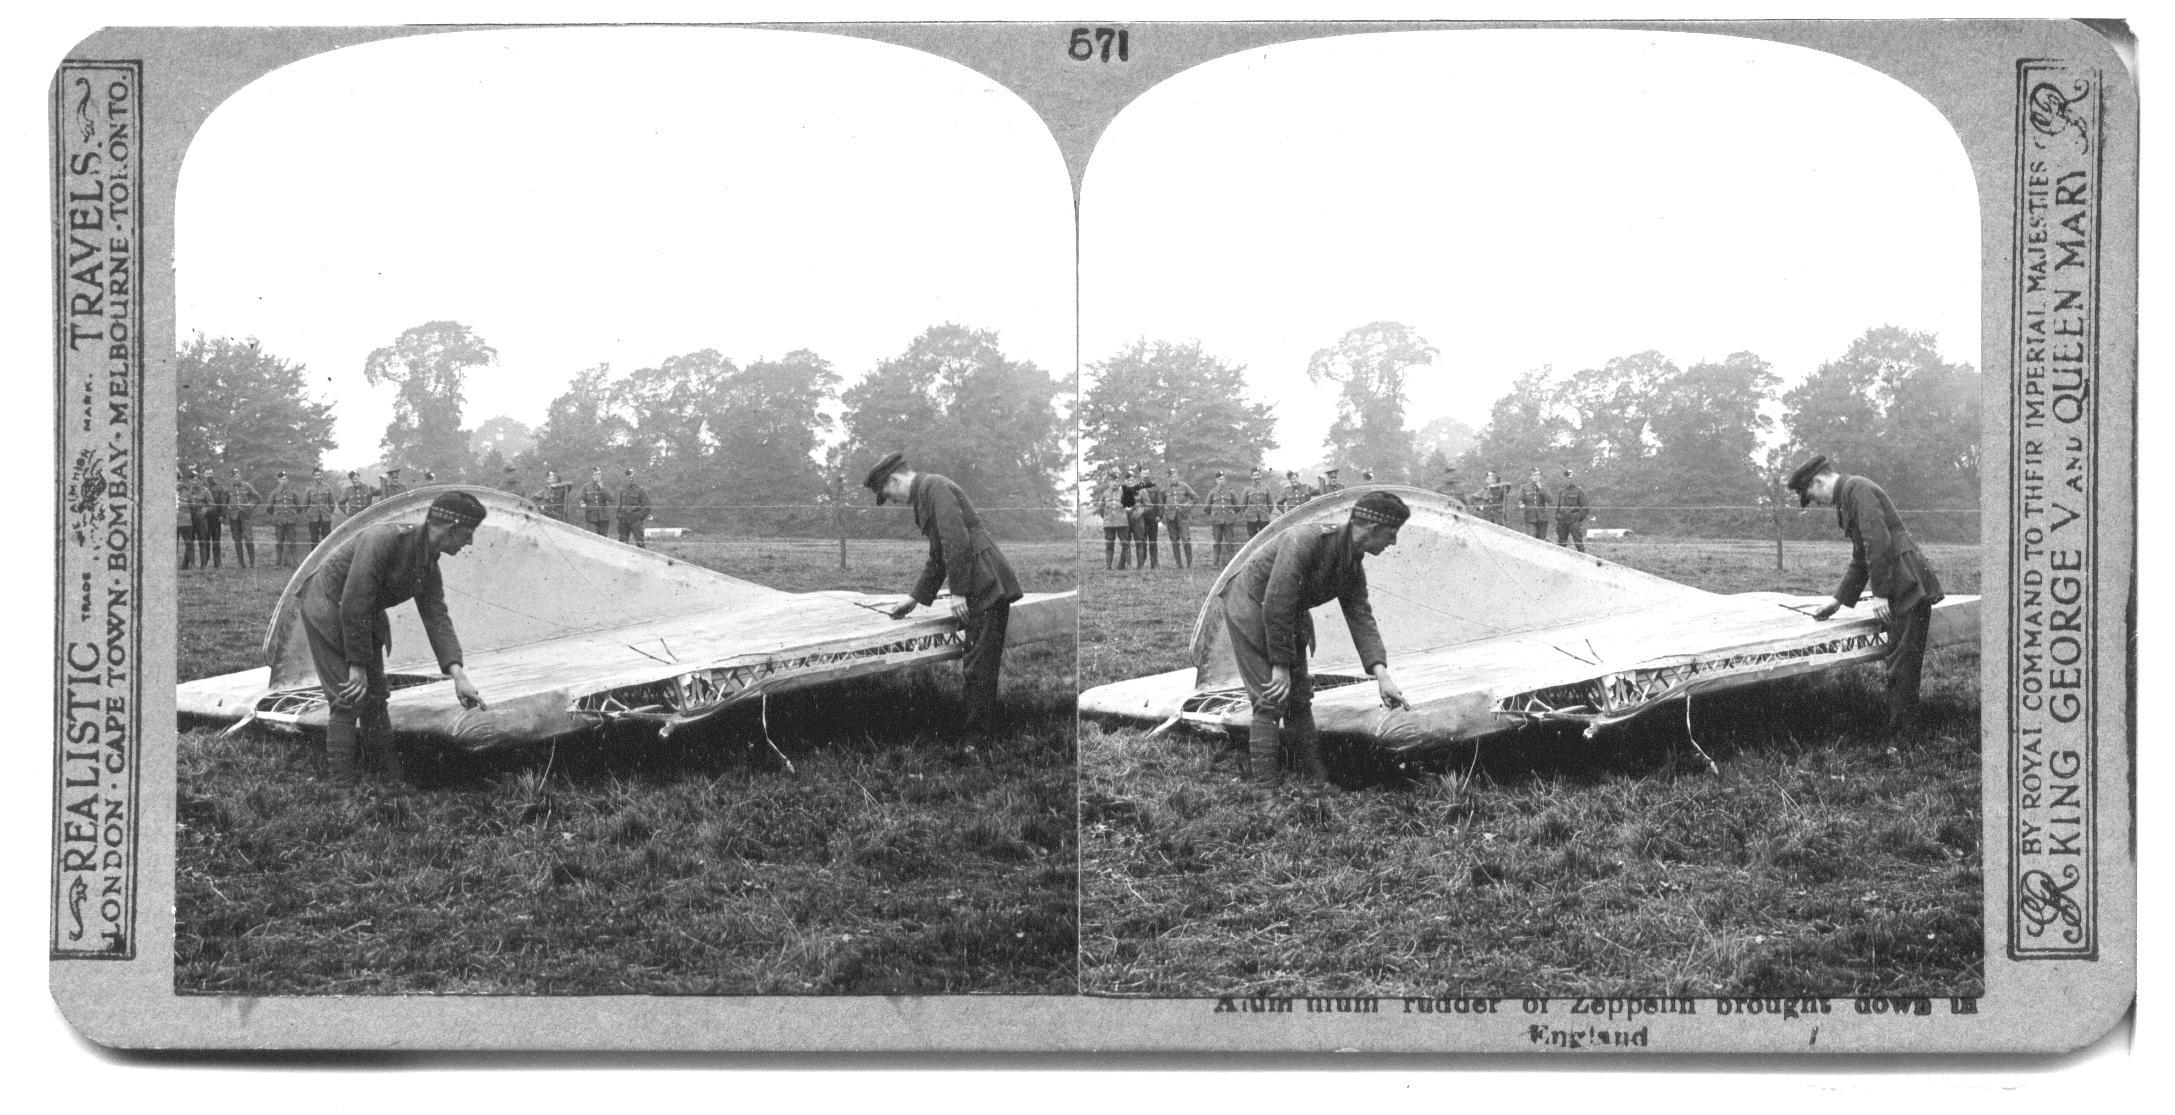 Aluminum rudder of Zeppelin brought down in England